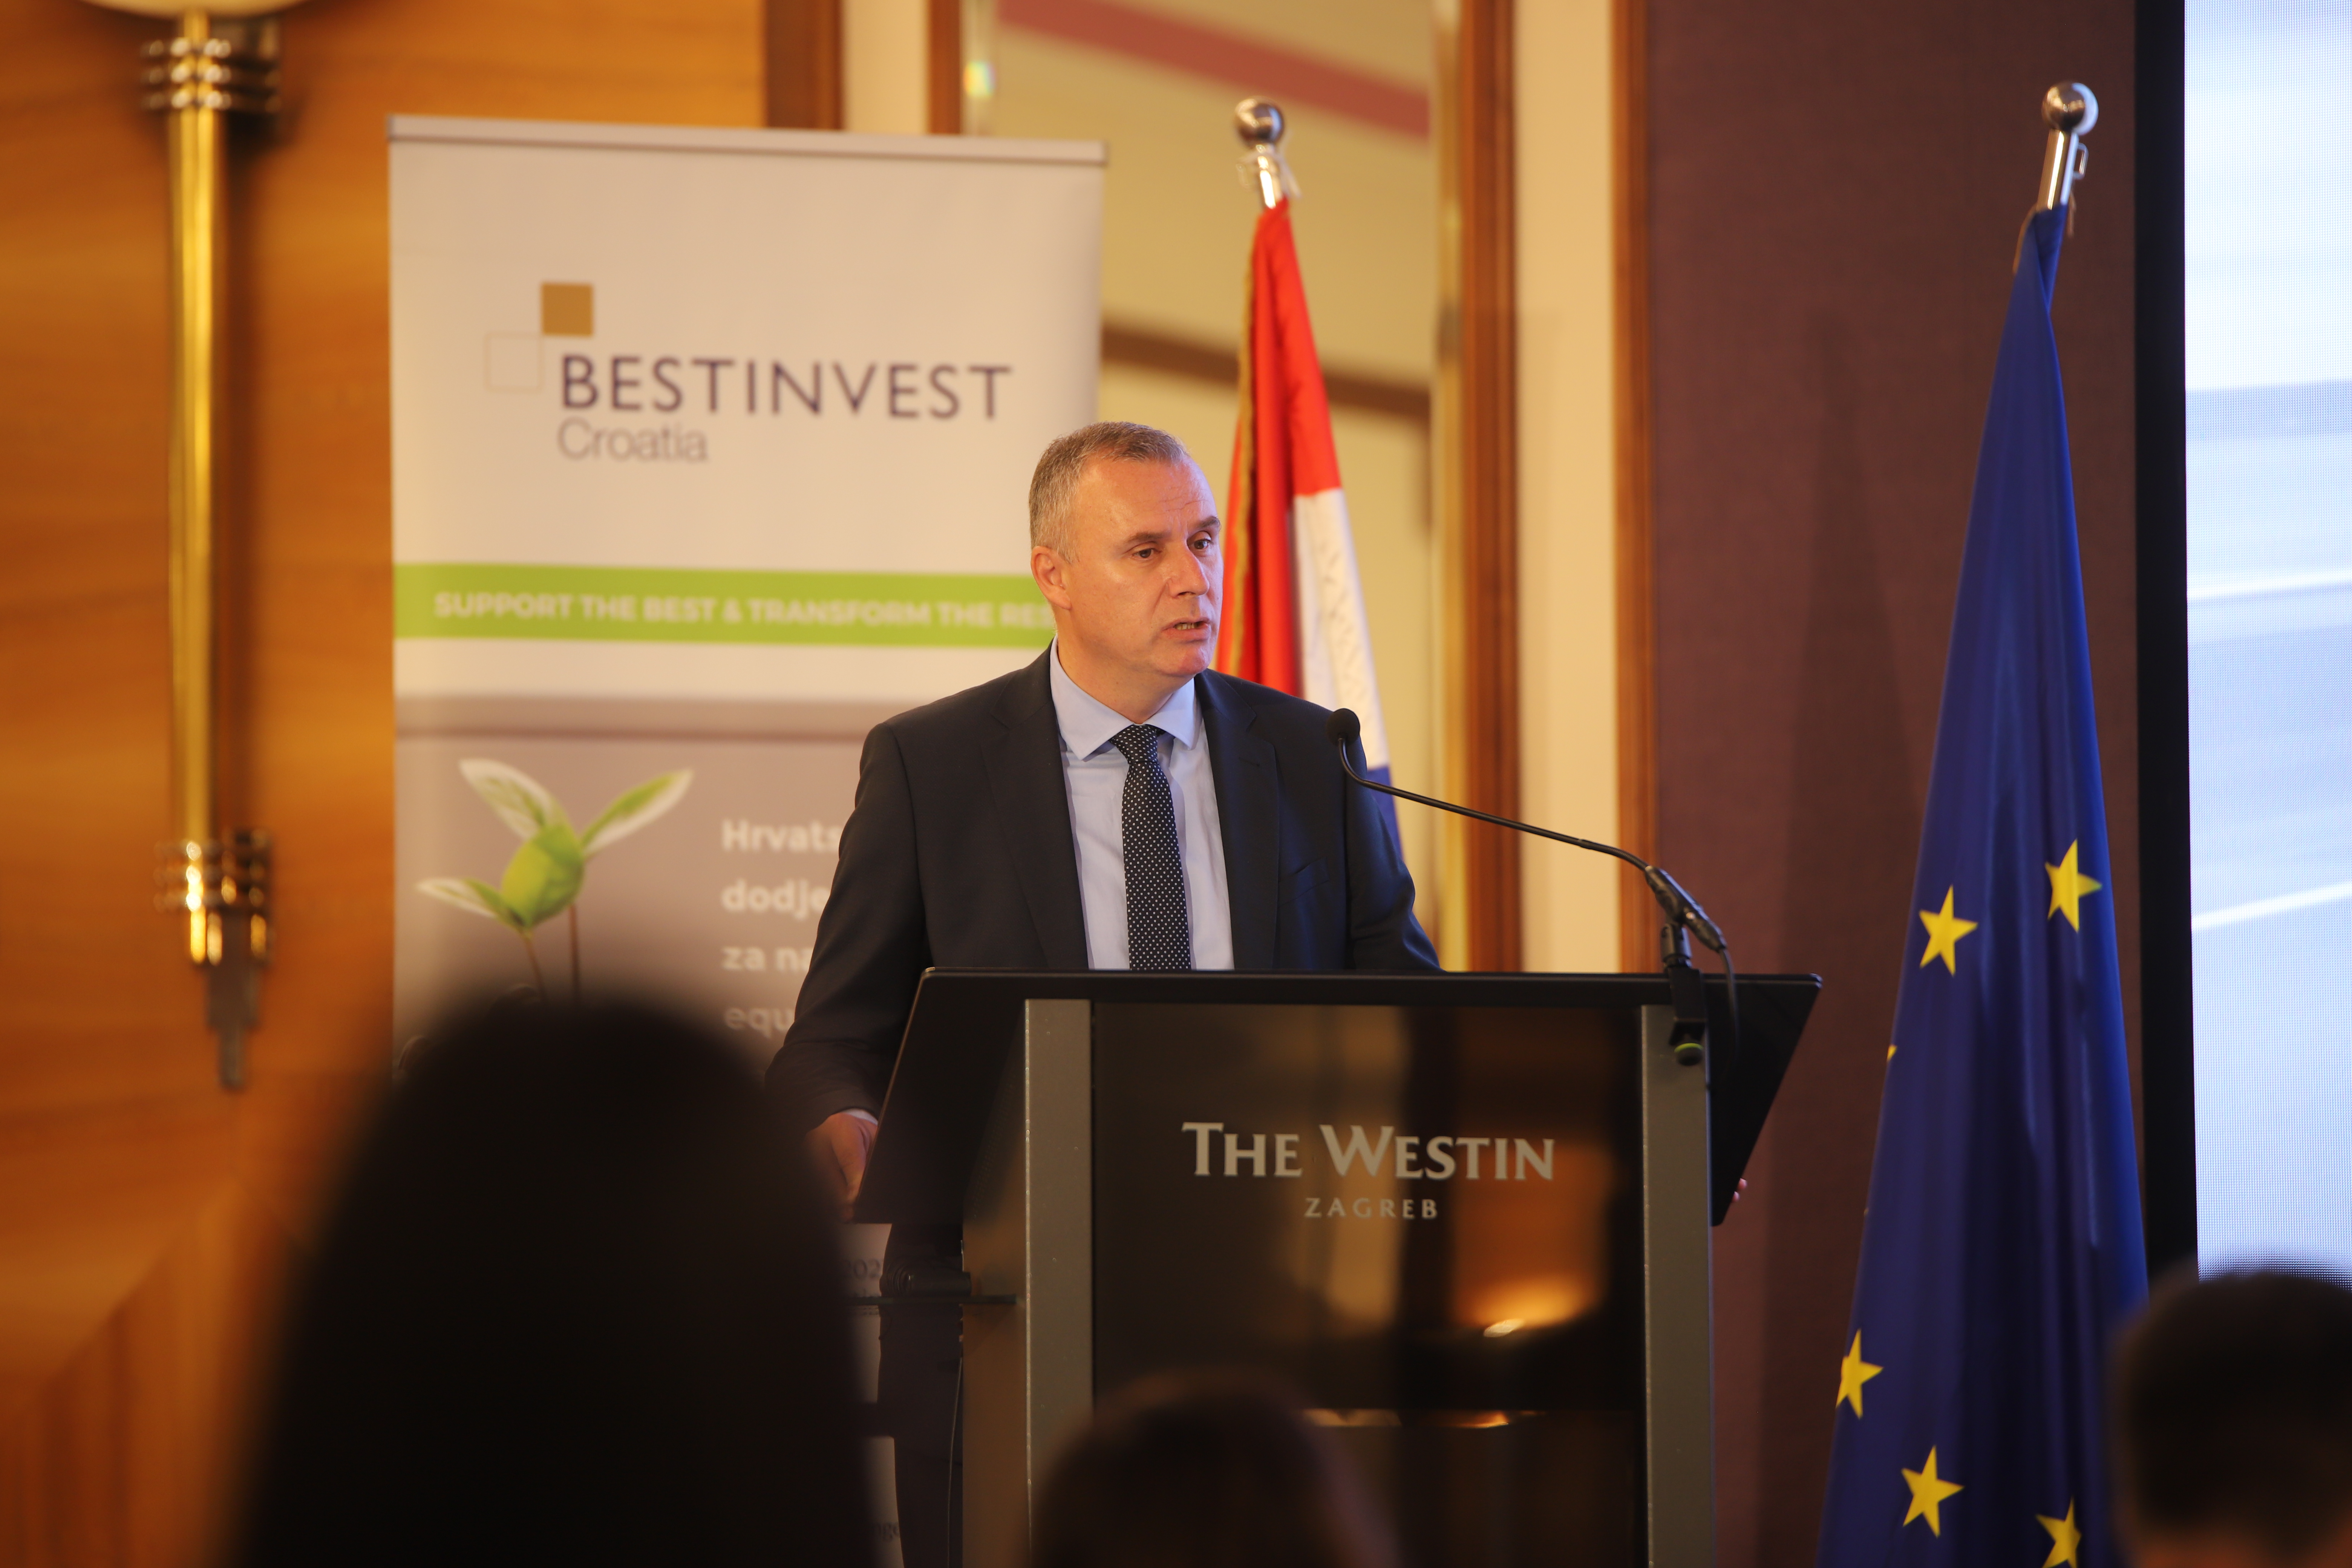 Predsjednik HBOR-a Hrvoje Čuvalo na godišnjoj konferenciji BestInvest Hrvatska 